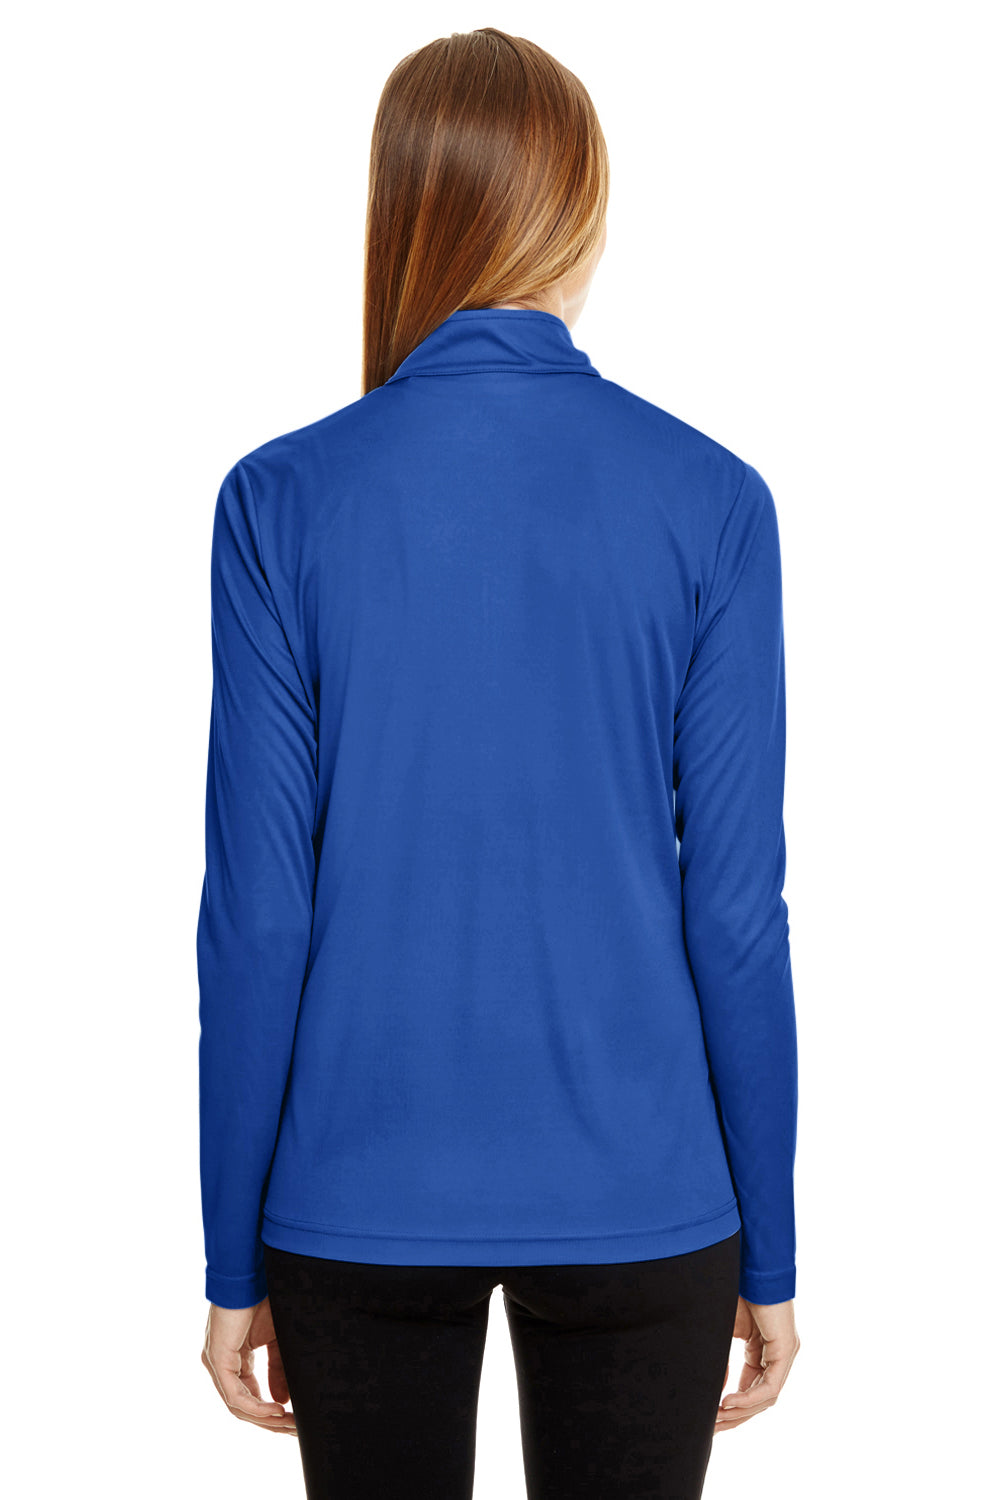 Team 365 TT31W Womens Zone Performance Moisture Wicking 1/4 Zip Sweatshirt Royal Blue Back